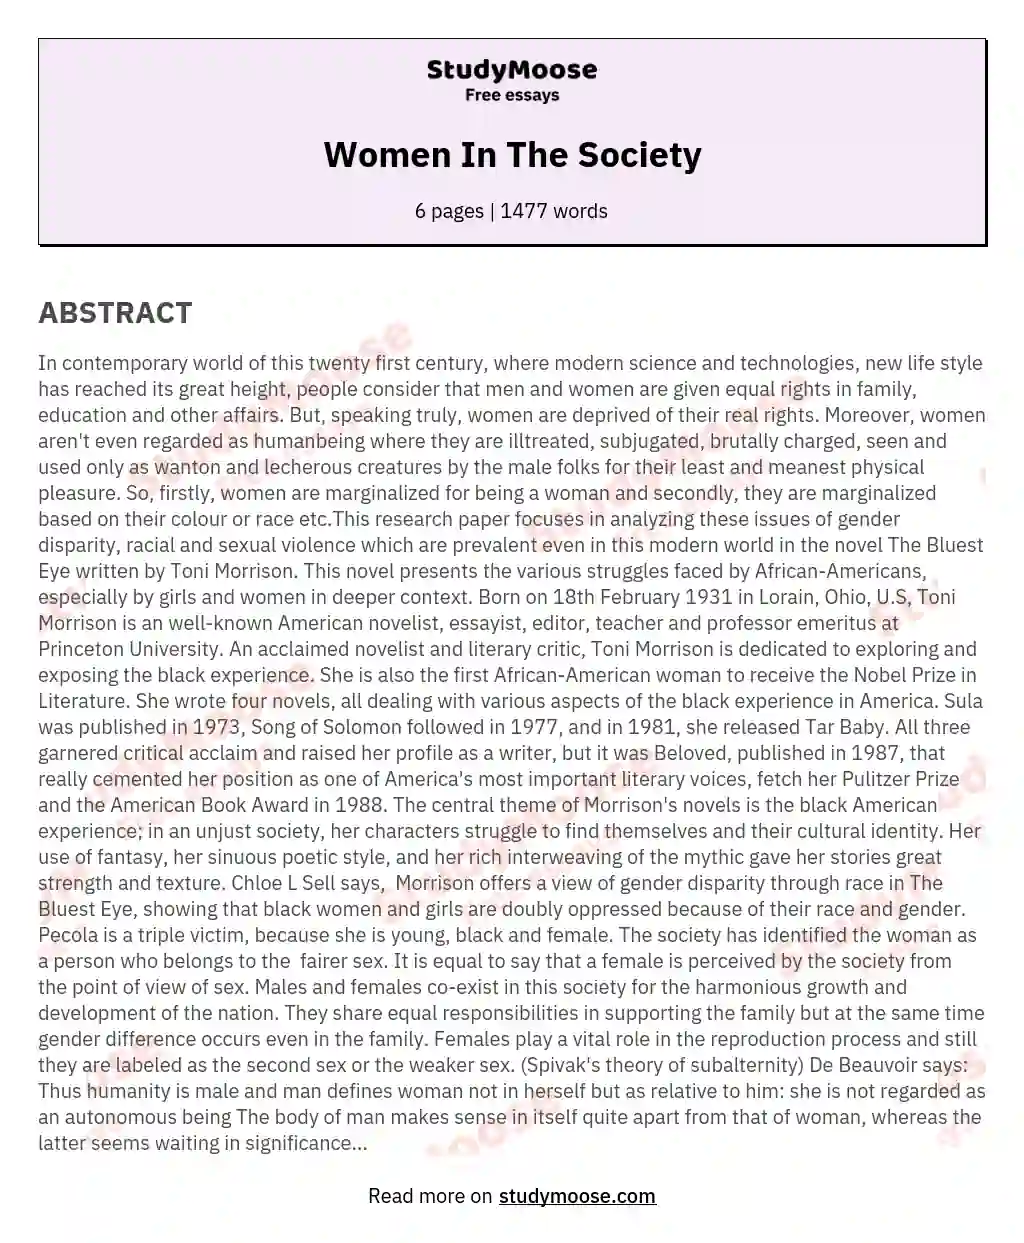 Women In The Society essay